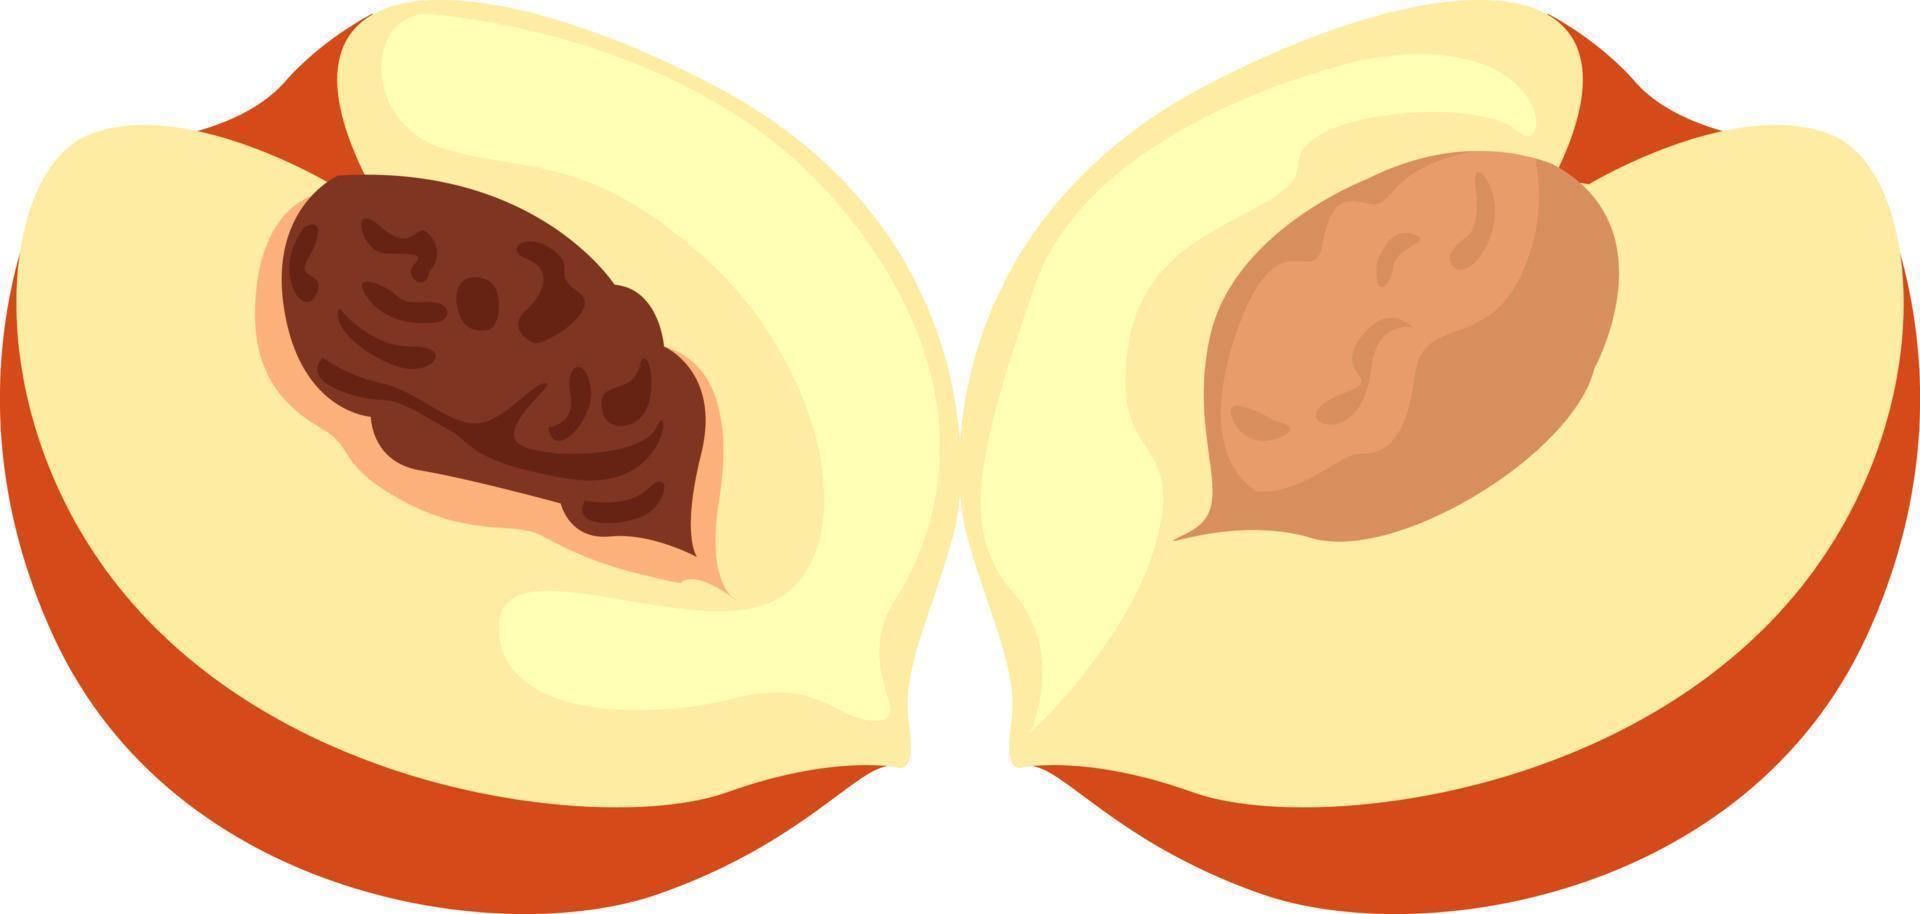 Peach in half, illustration, vector on white background